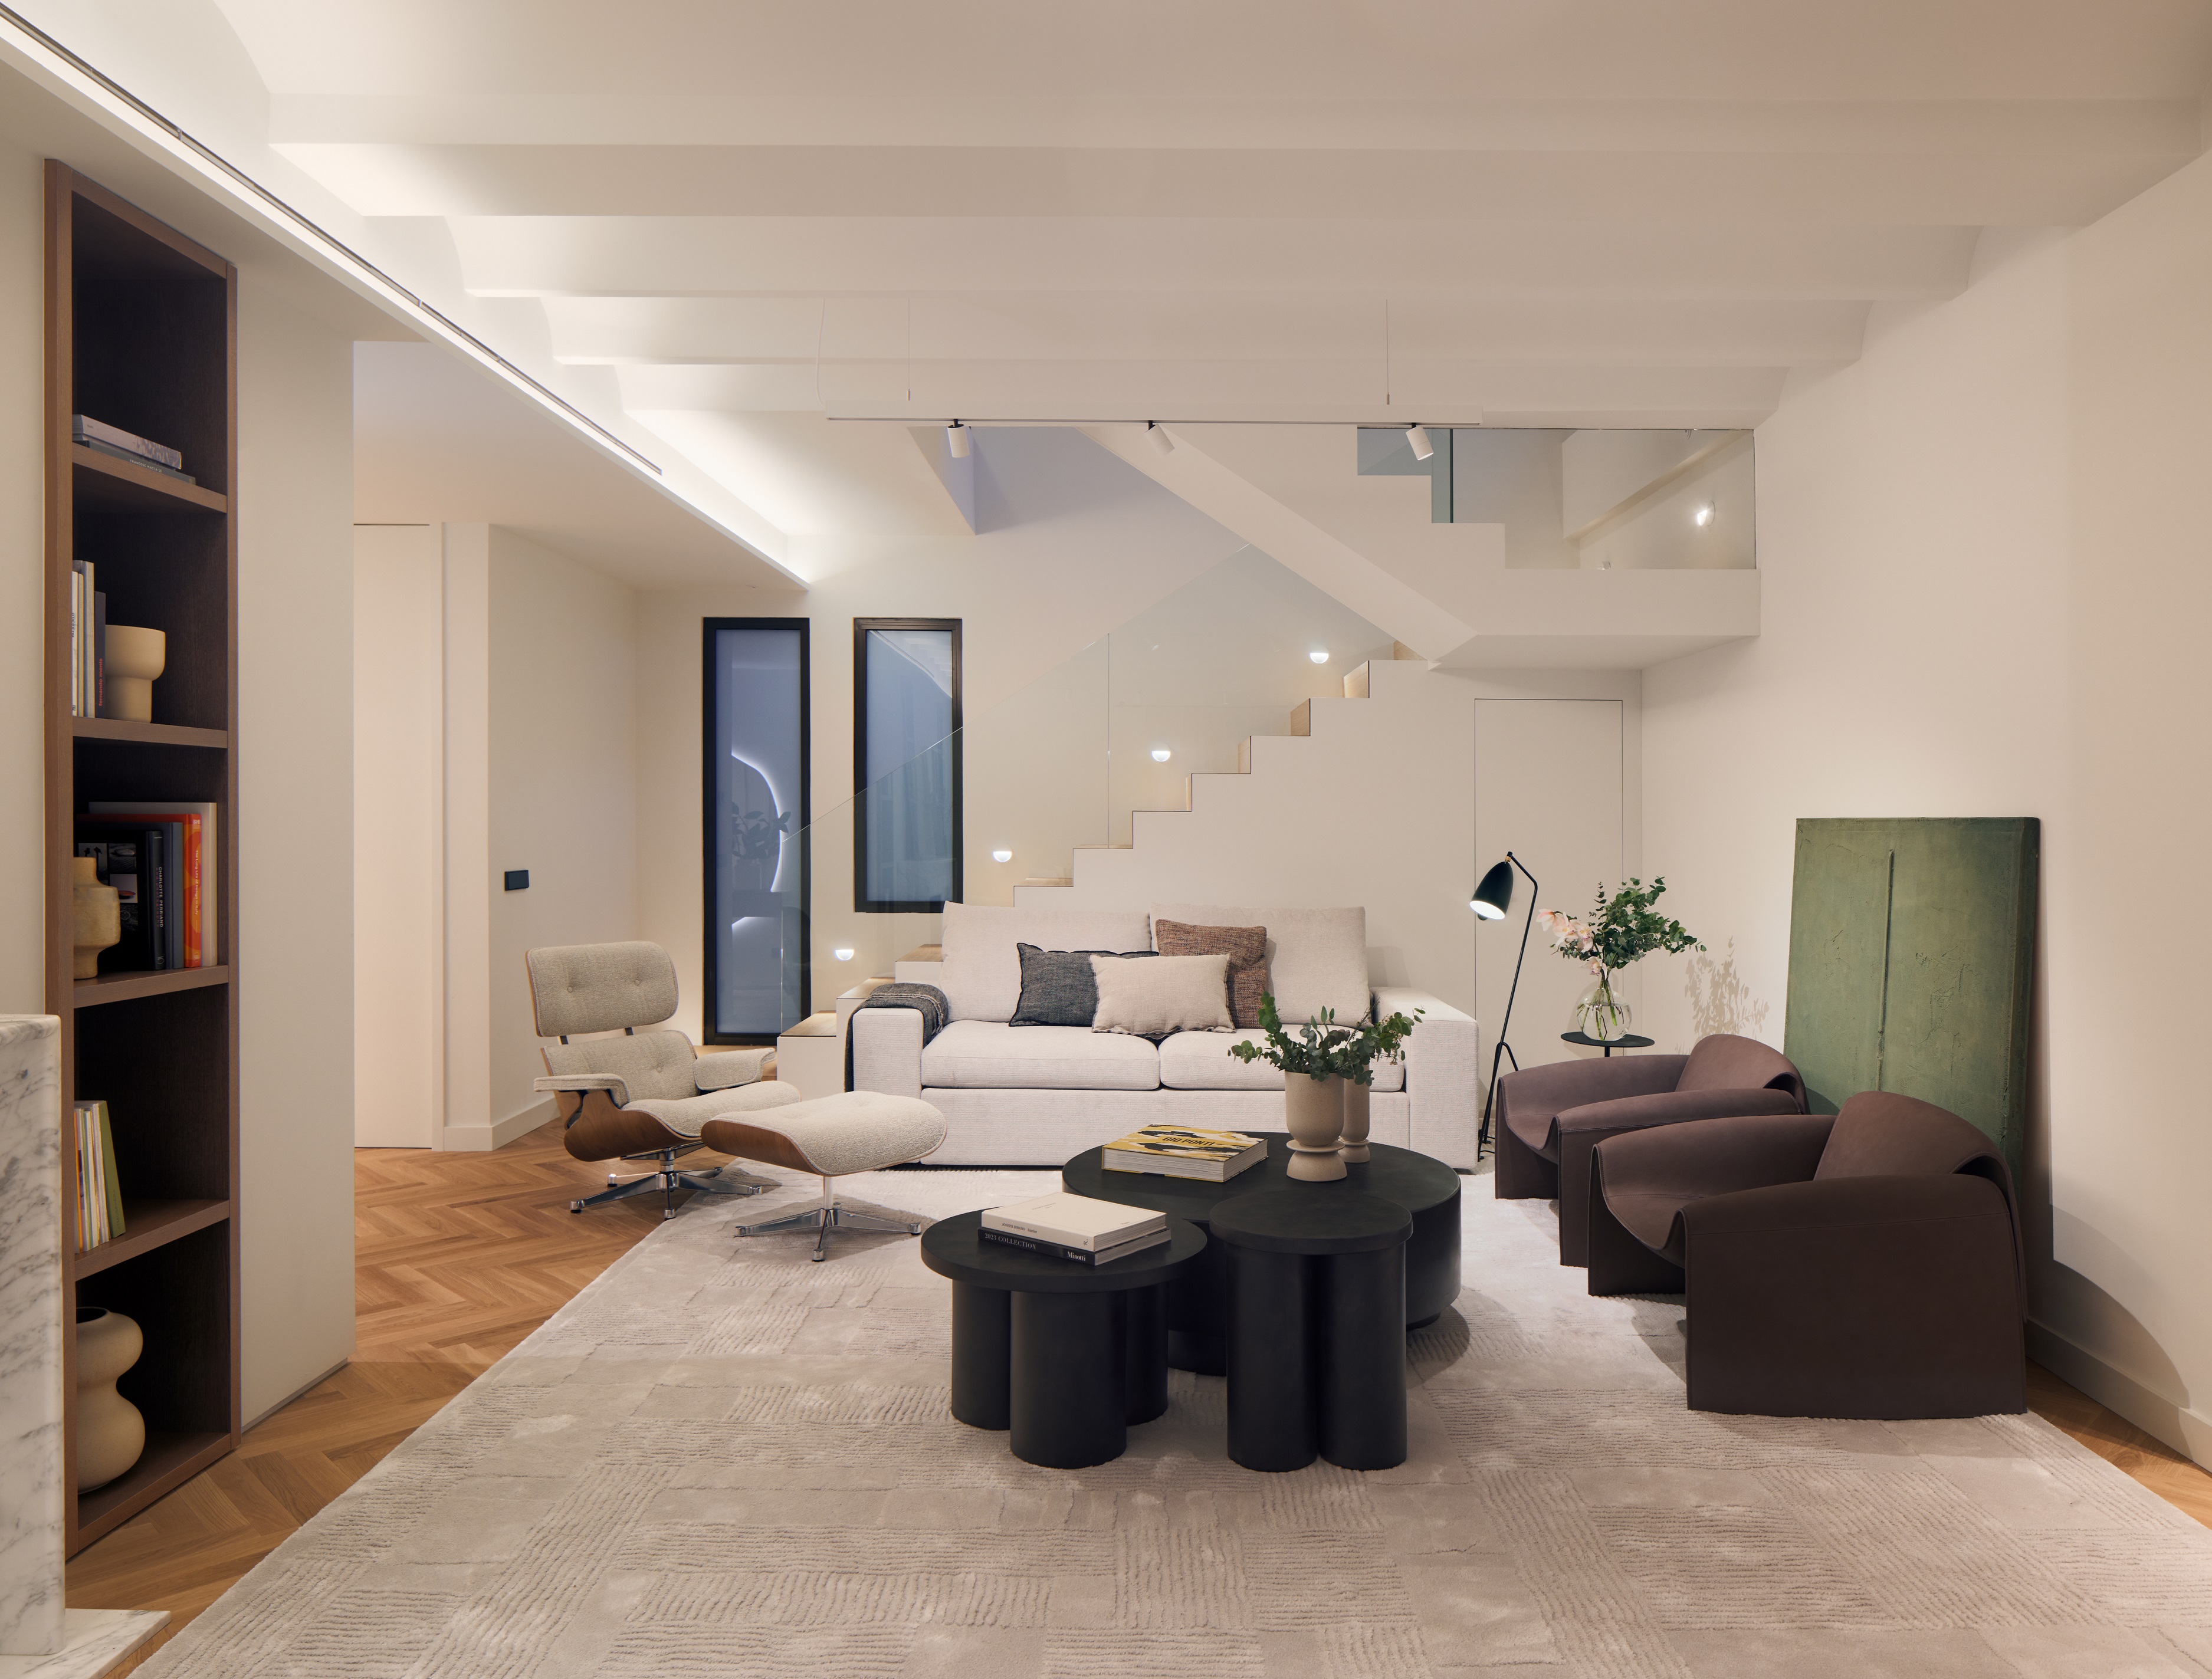 Pedralbes AV. Penthouse LUV Studio Living Room 8 - LUV Studio - Arquitectura y diseño - Barcelona